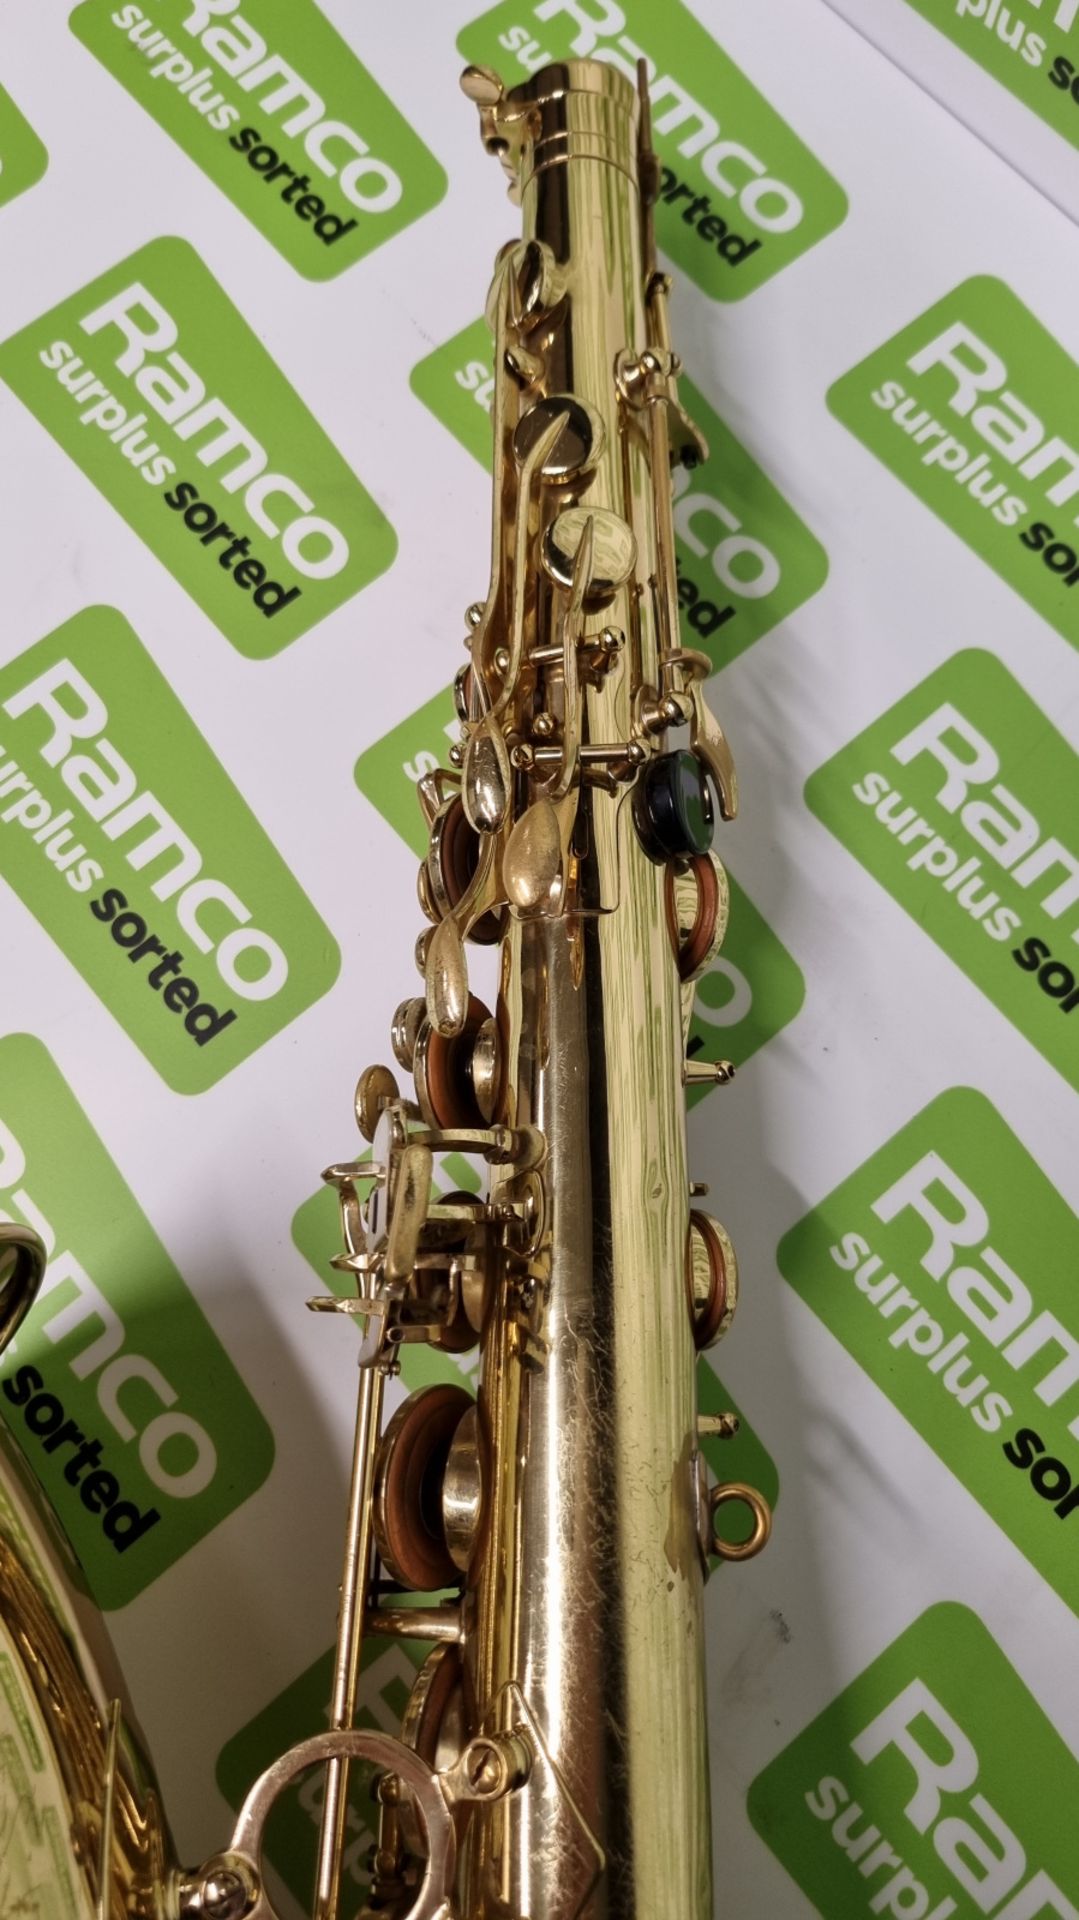 Henri Selmer 80 Super Action Serie ll saxophone in Henri Selmer case - serial number: 702272 - Image 13 of 26